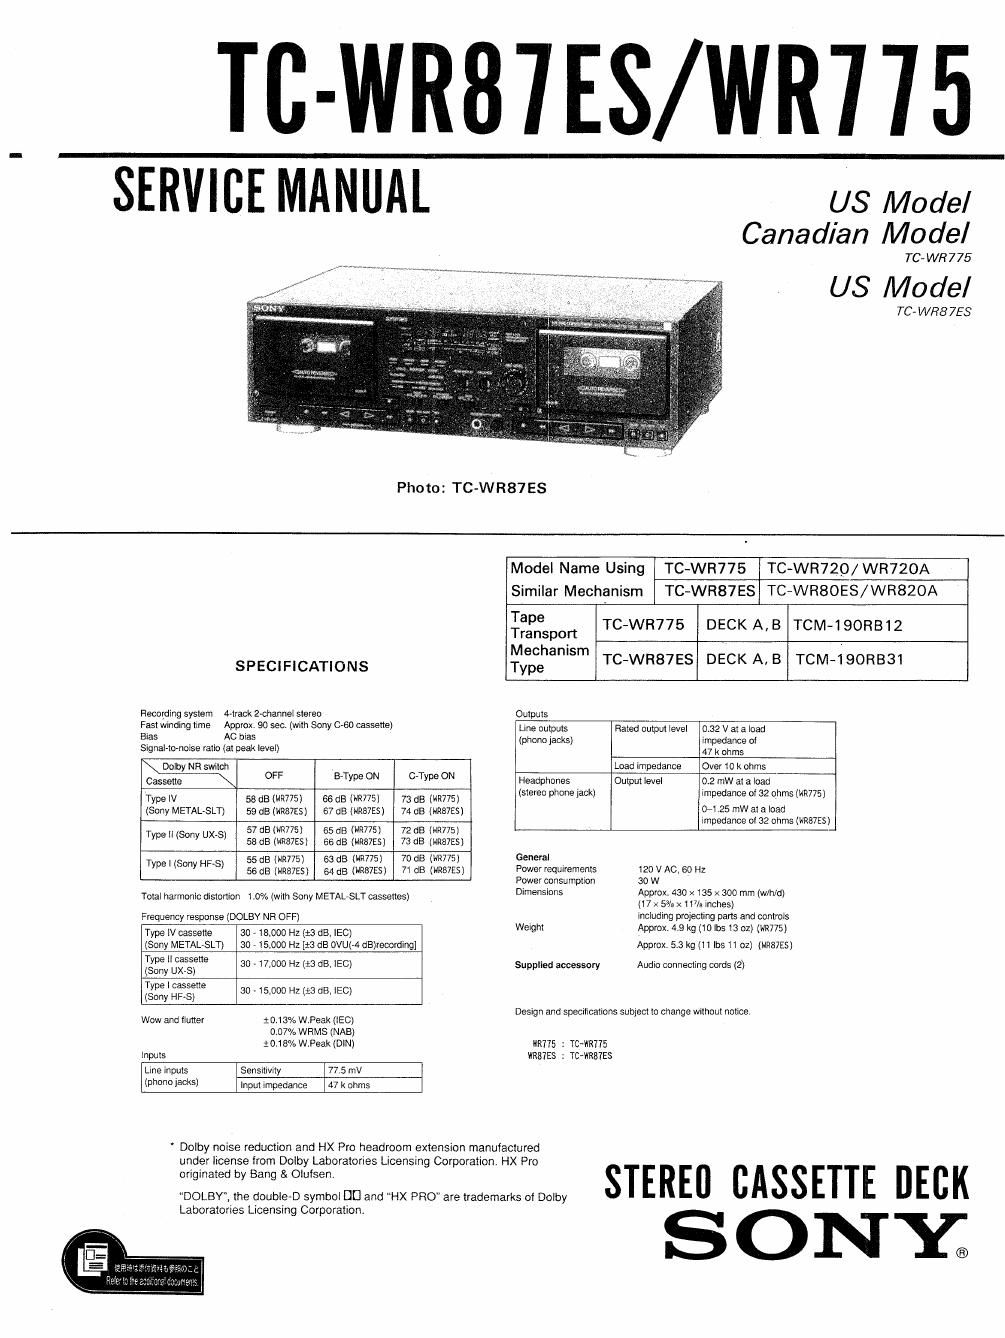 sony tc wr 775 service manual